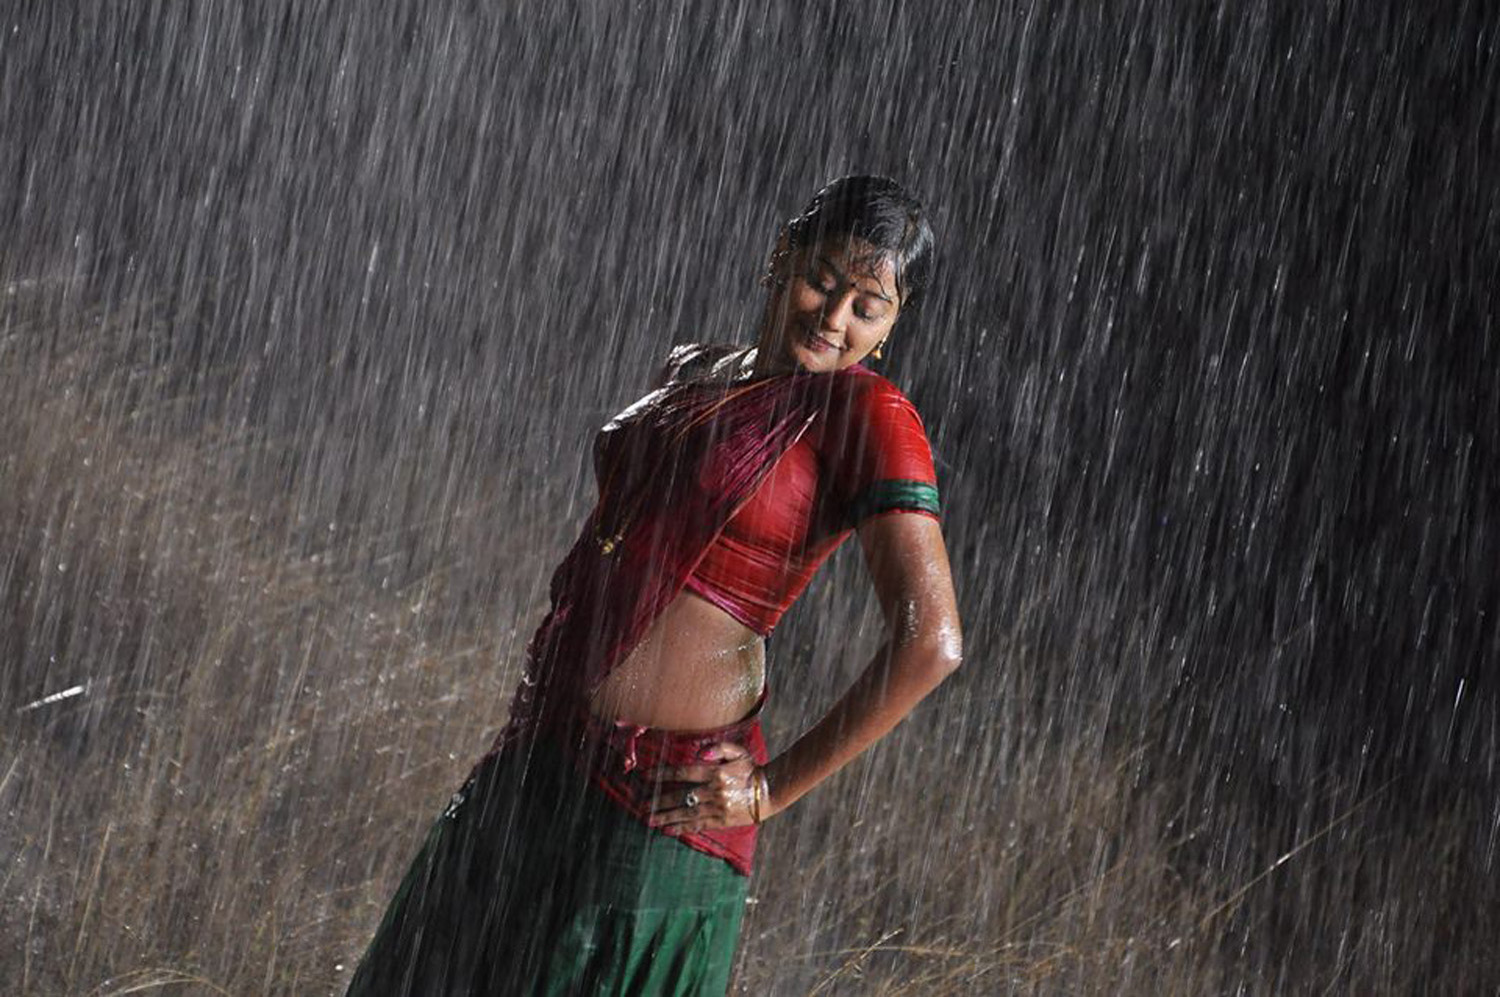 Actress Gallery Stills 3-Tamil-Telugu-Kannada Actress